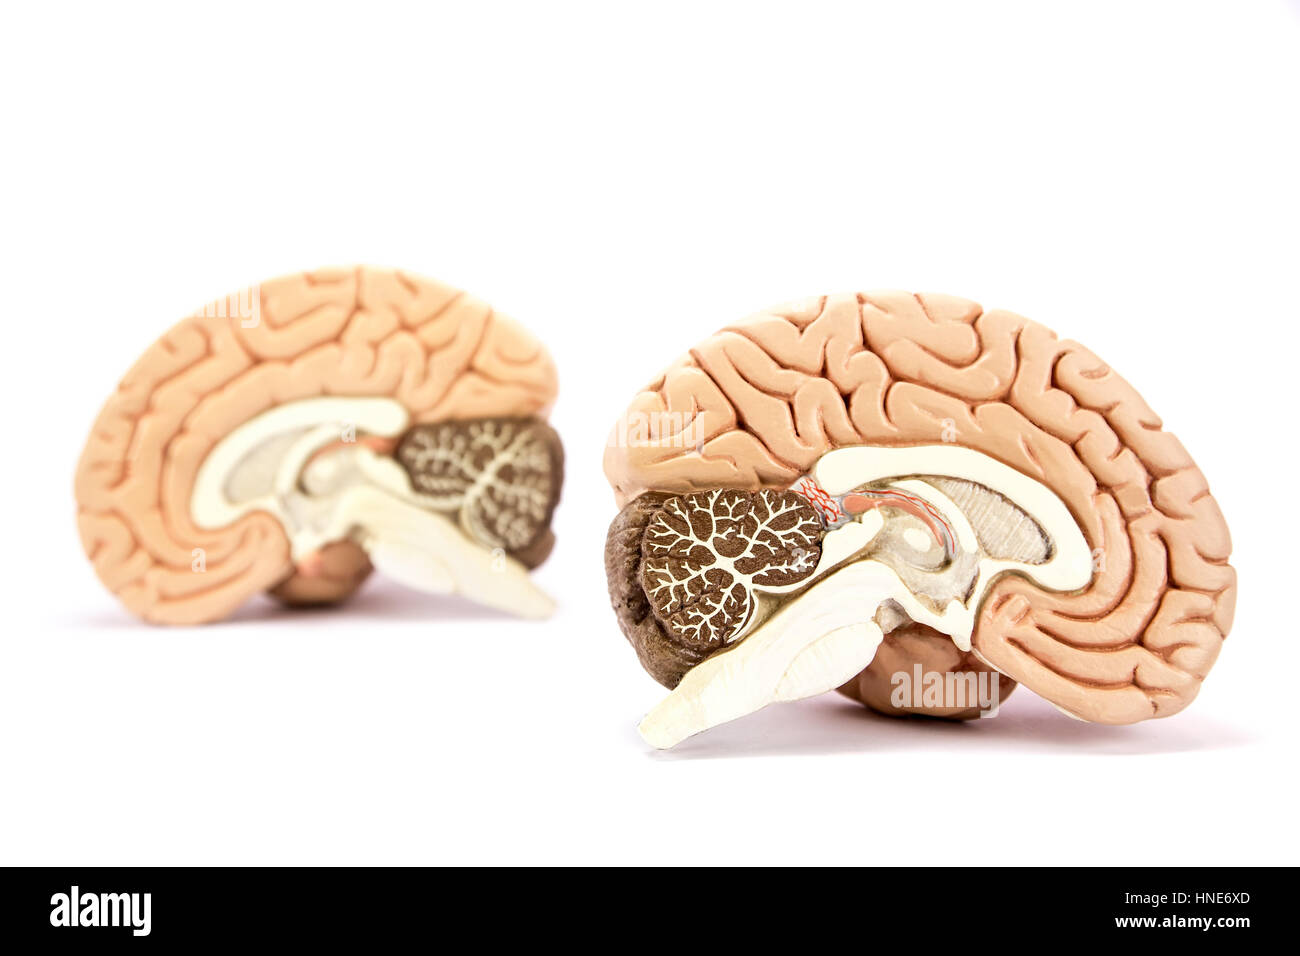 Umano due emisferi cerebrali modelli isolati su sfondo bianco Foto Stock